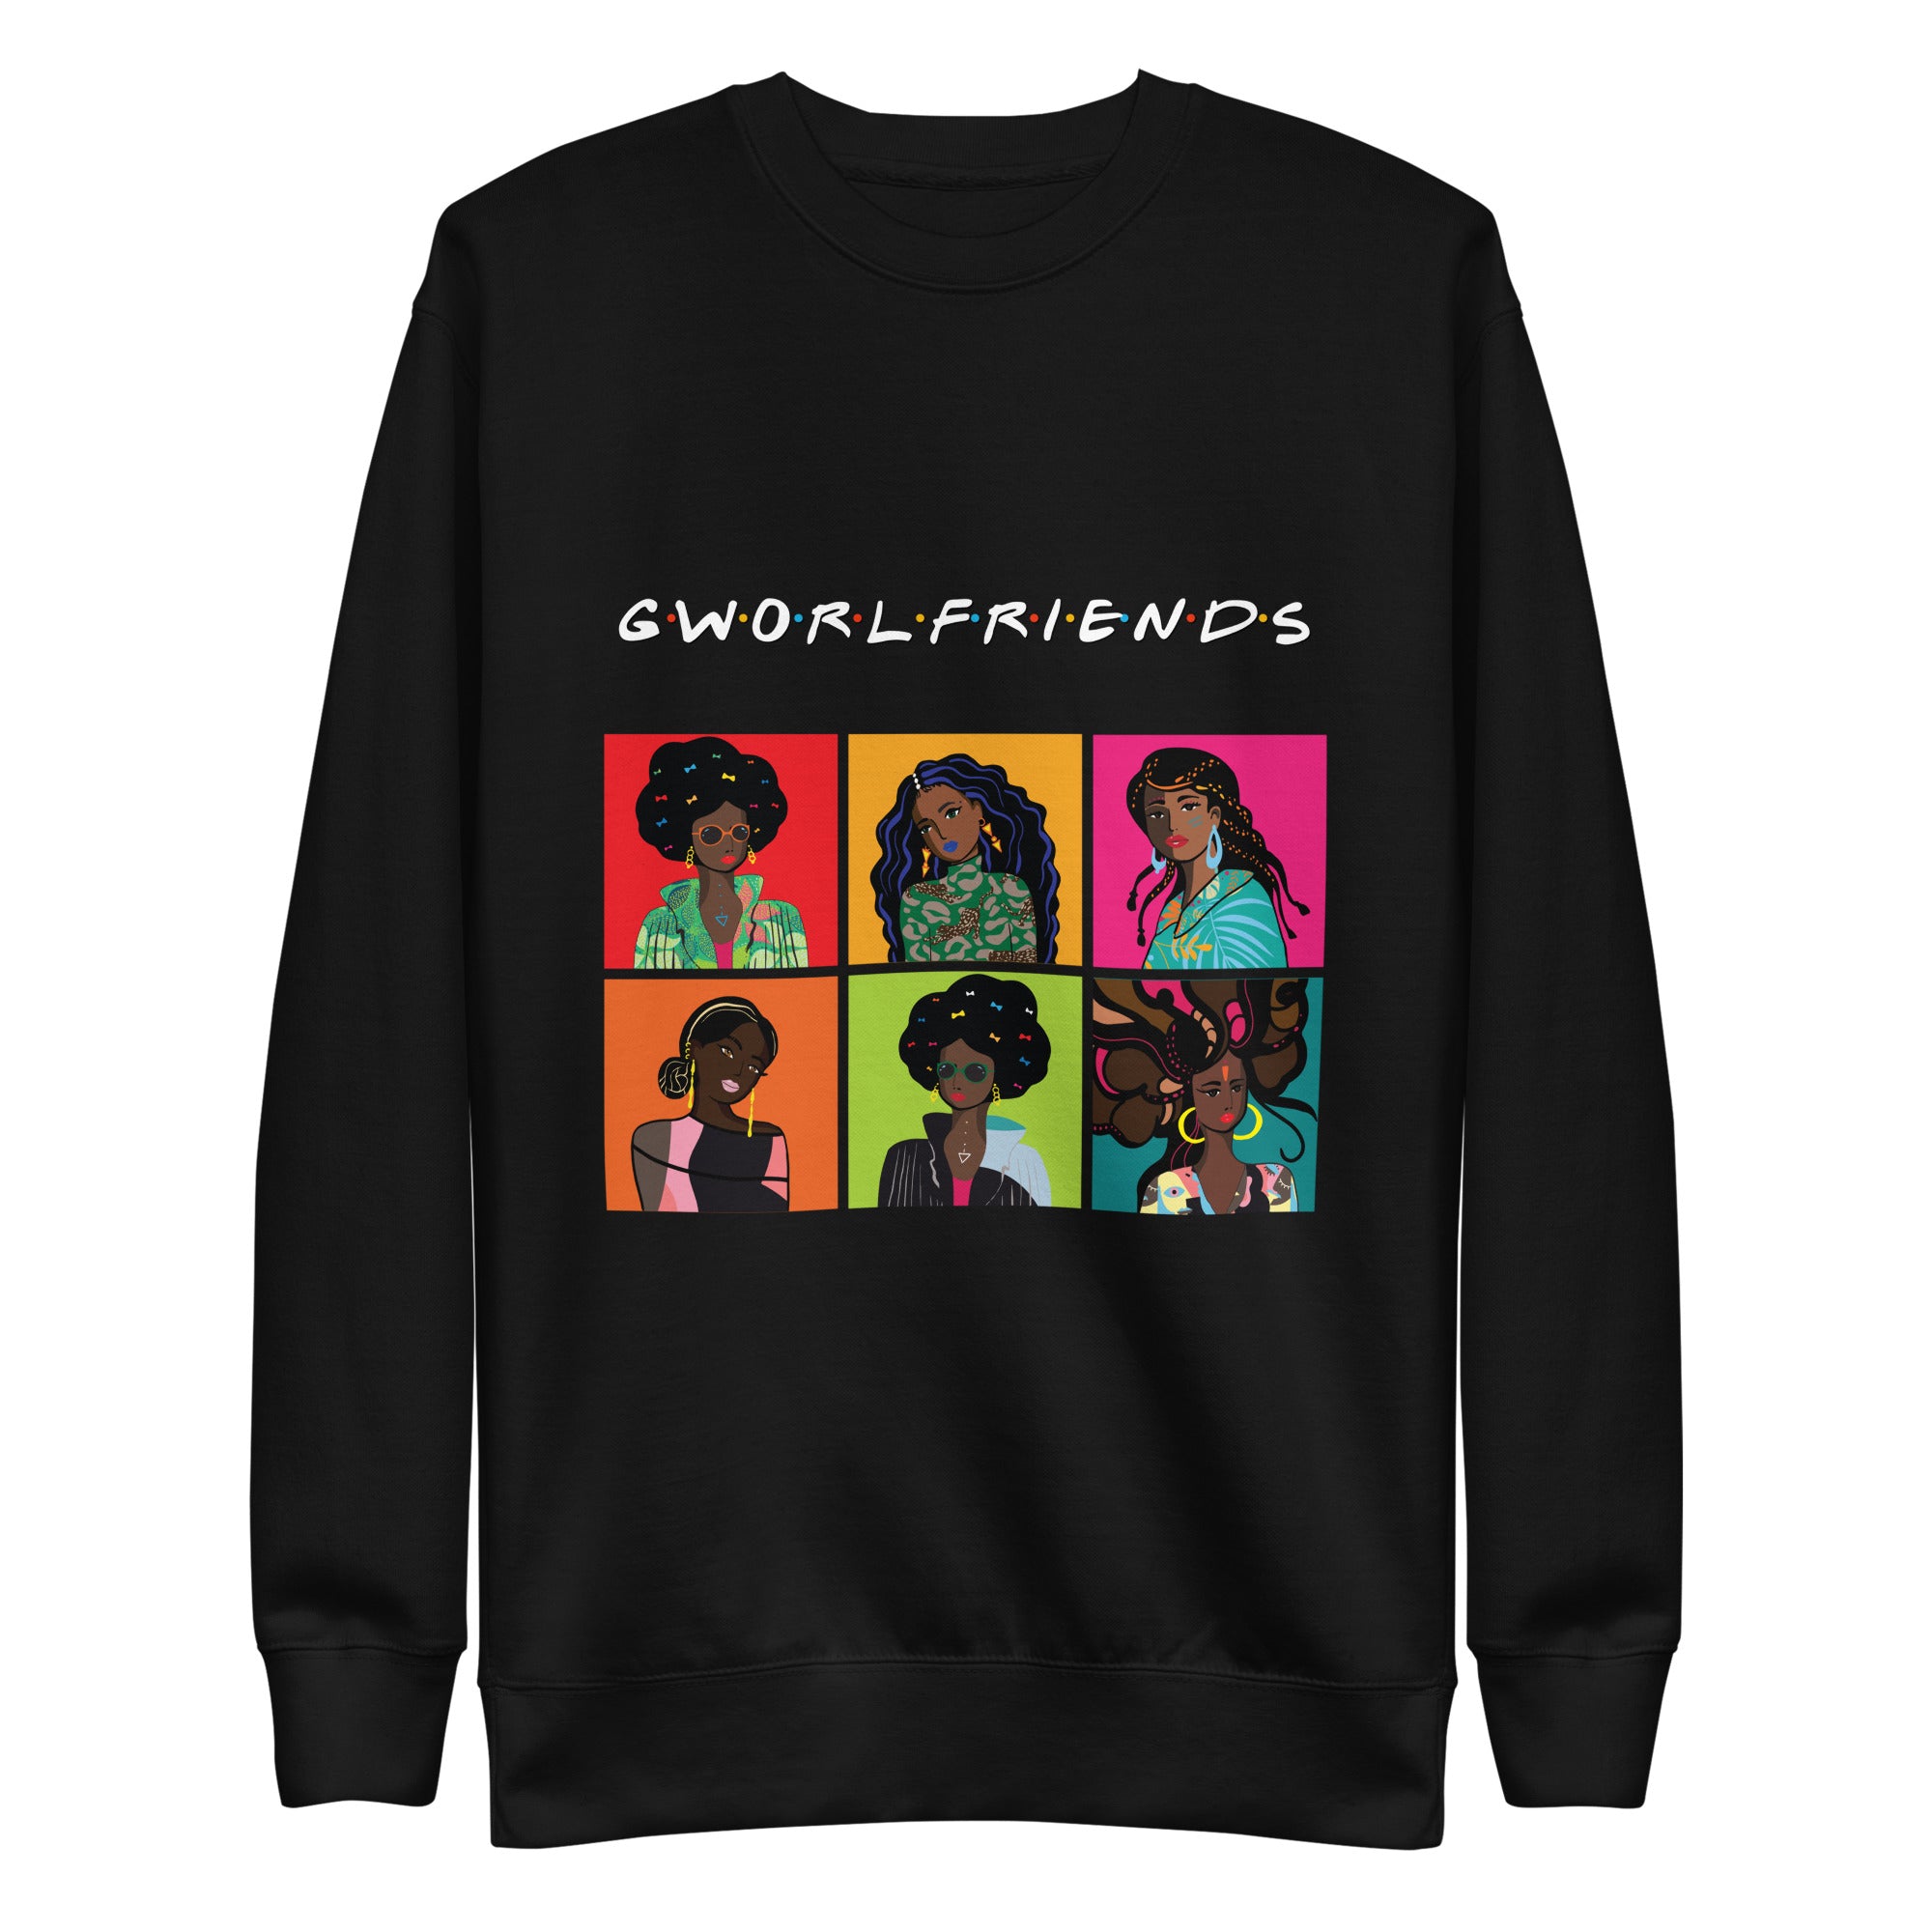 Gworlfriends Sweatshirt